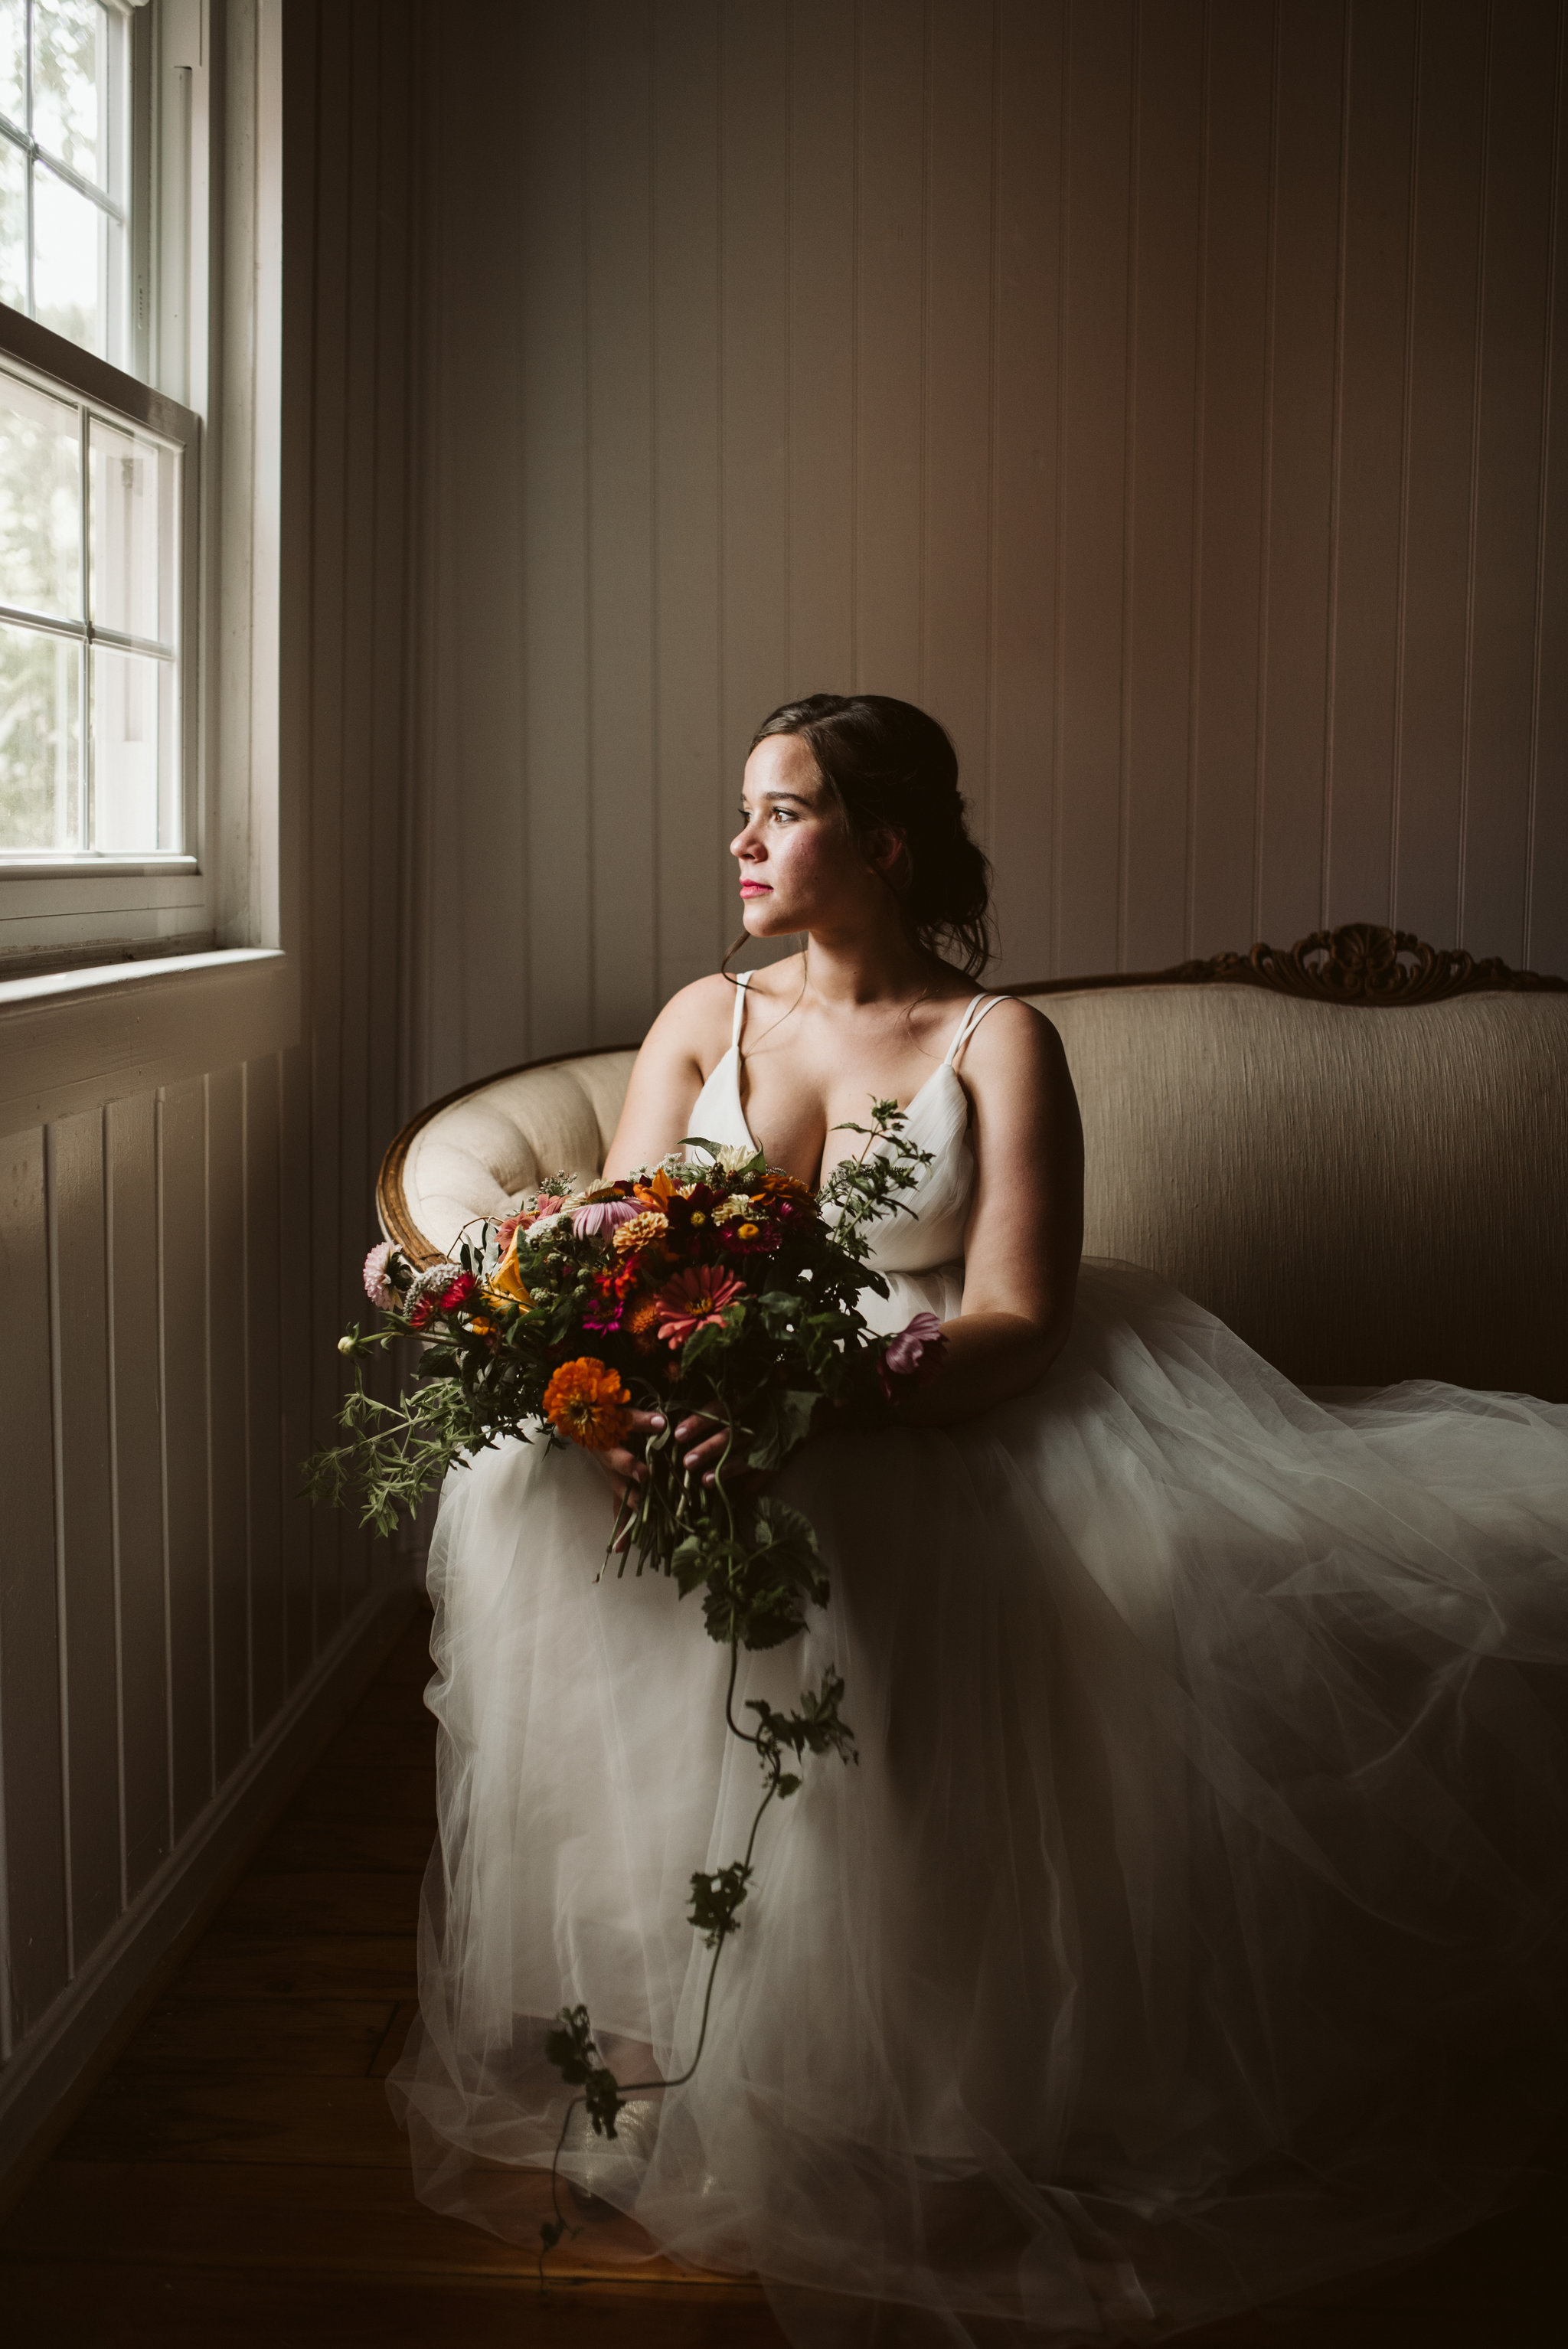 Rocklands Farm, Maryland, Intimate Wedding, Baltimore Wedding Photographer, Sungold Flower Co, Rustic, Romantic, Barn Wedding, Romantic Portrait of Bride Near Window